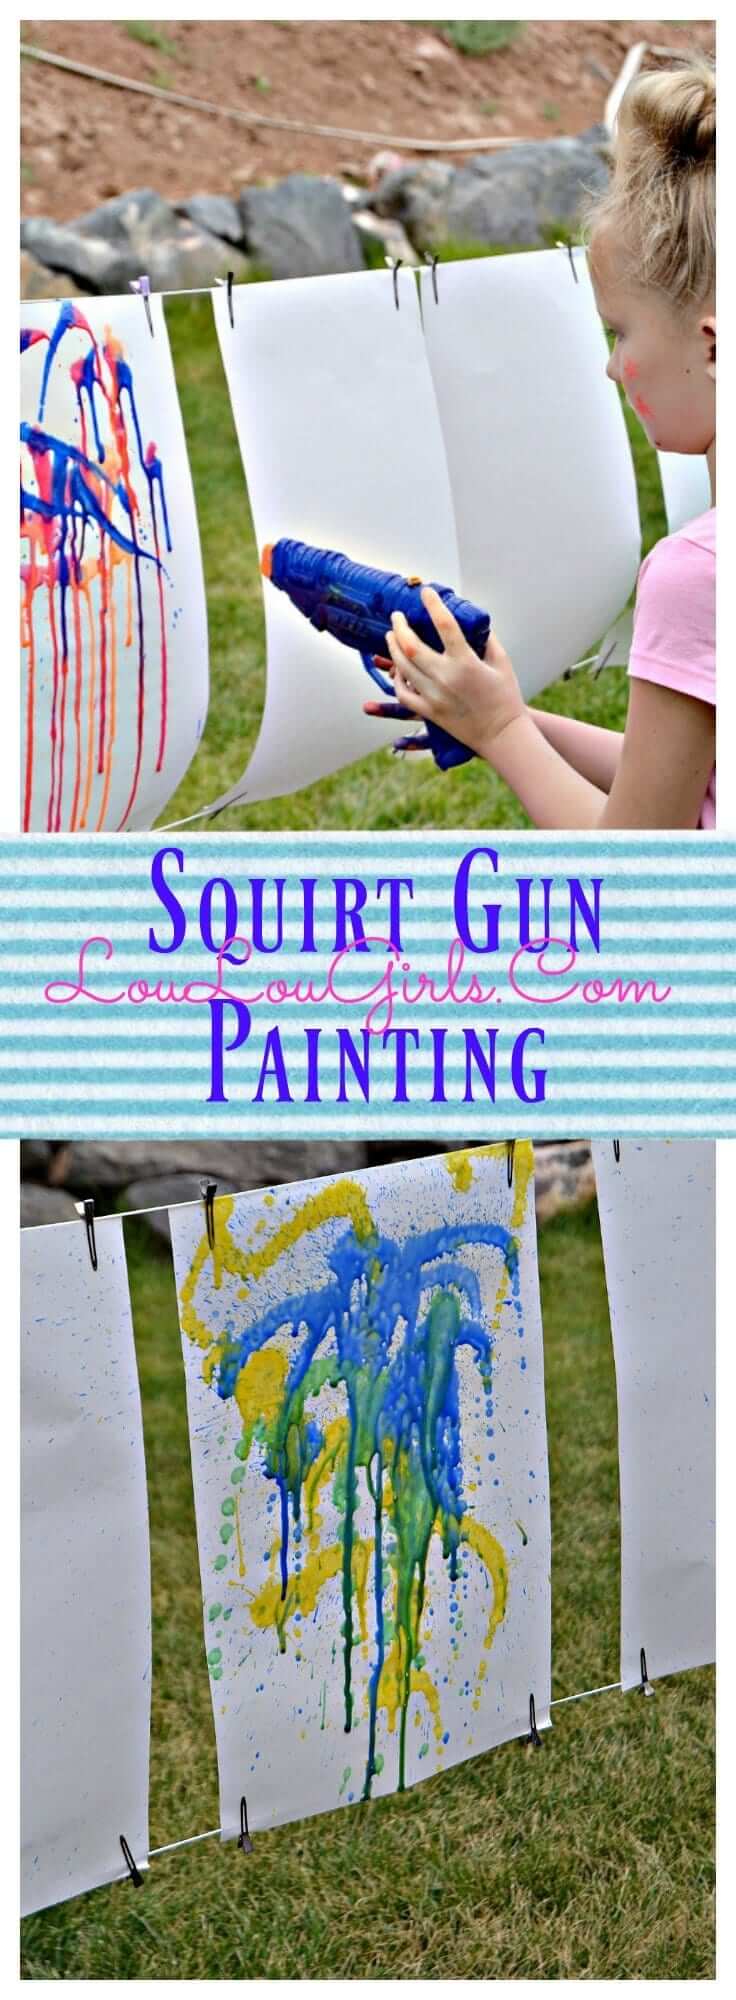 Squirt-gun -painting-tutorial